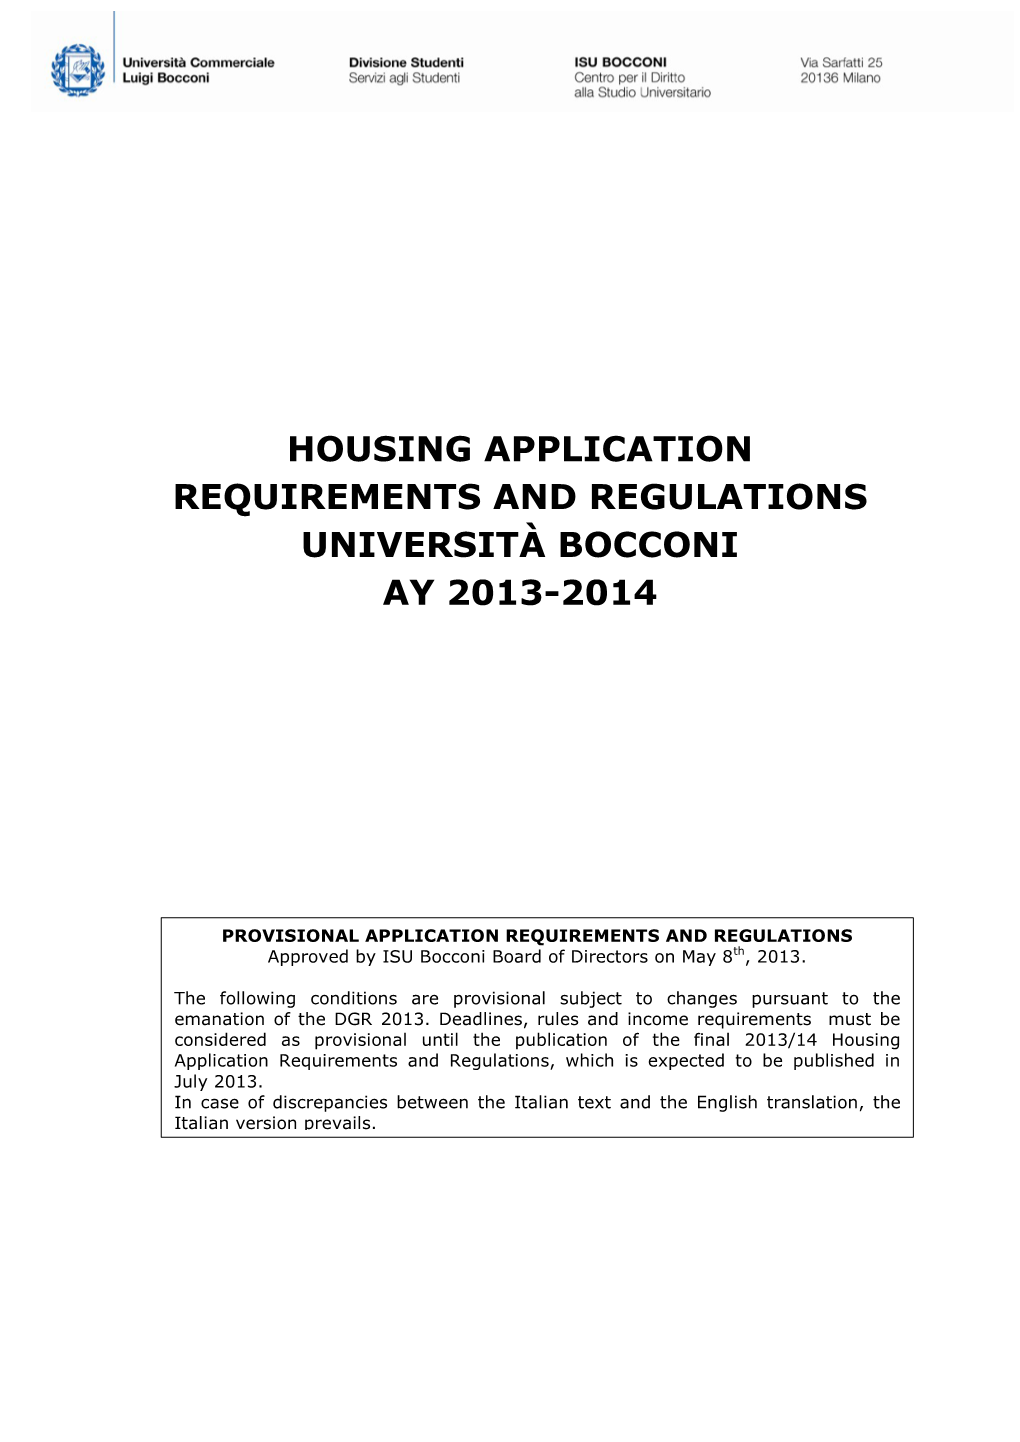 Housing Application Requirements and Regulations Università Bocconi Ay 2013-2014